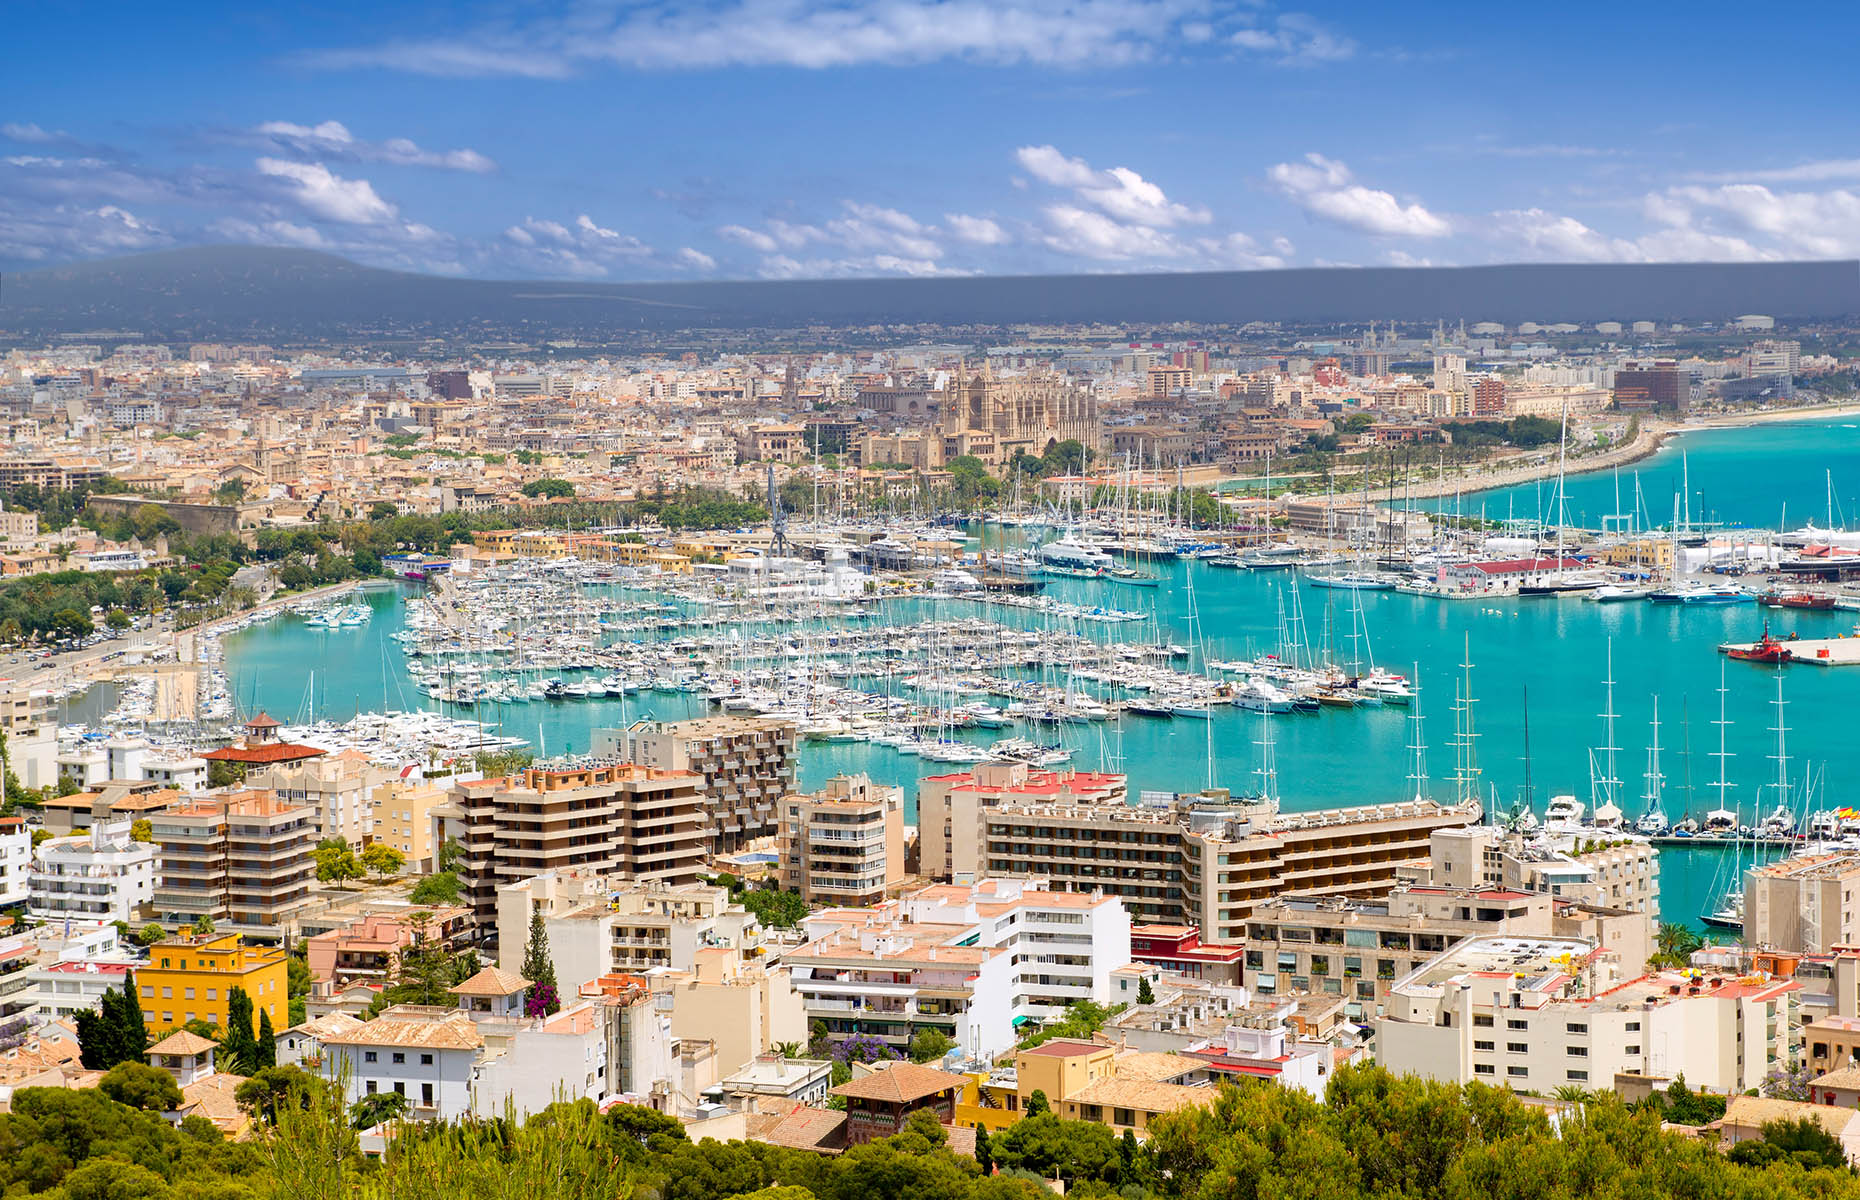 Aerial view of Mallorca in the Balearic Islands (Image: lunamarina/Shutterstock)